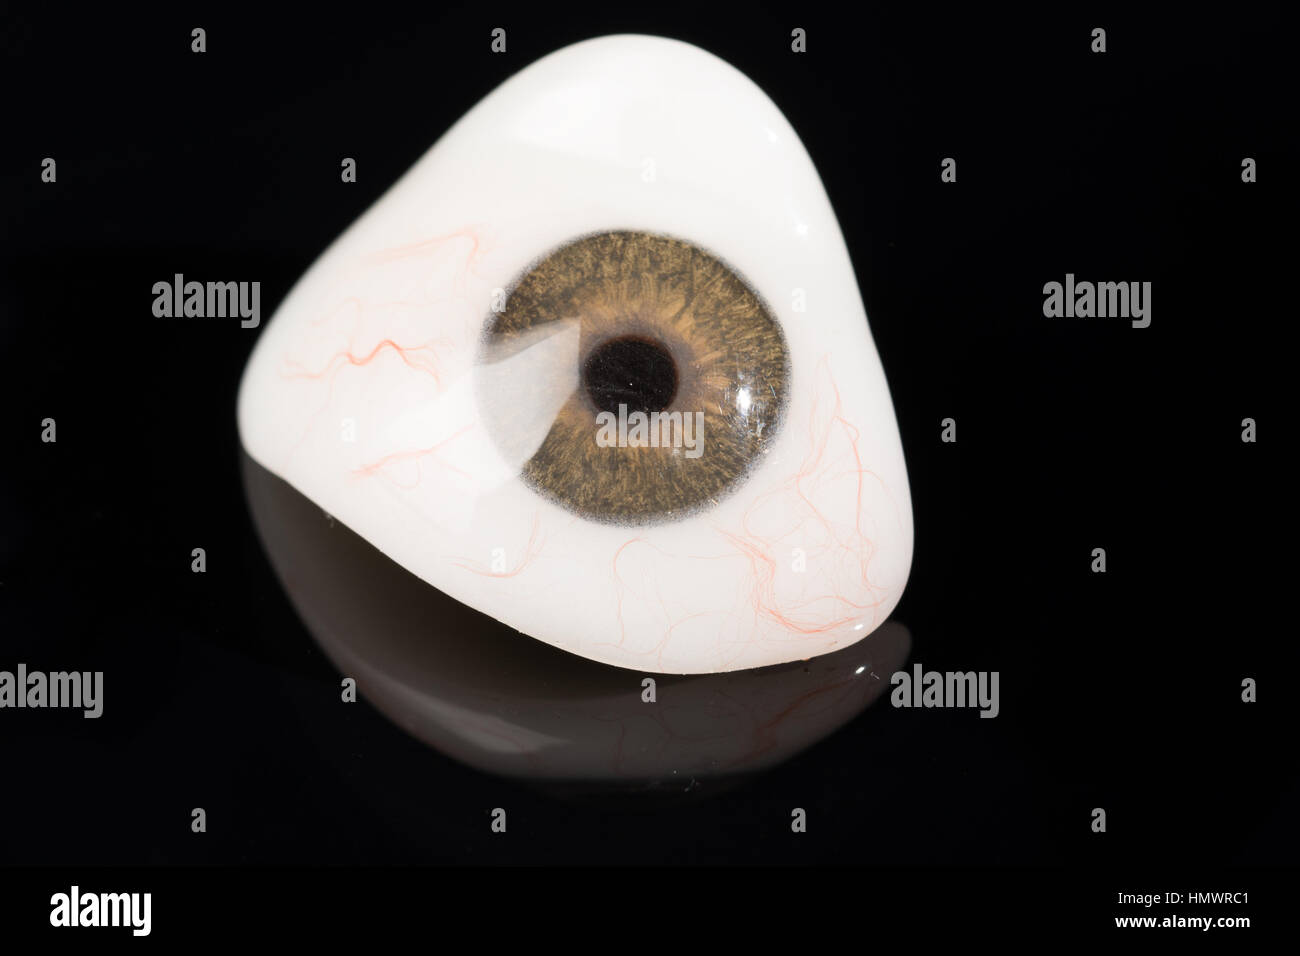 Glass eye prosthetic or Ocular prosthesis on black Stock Photo